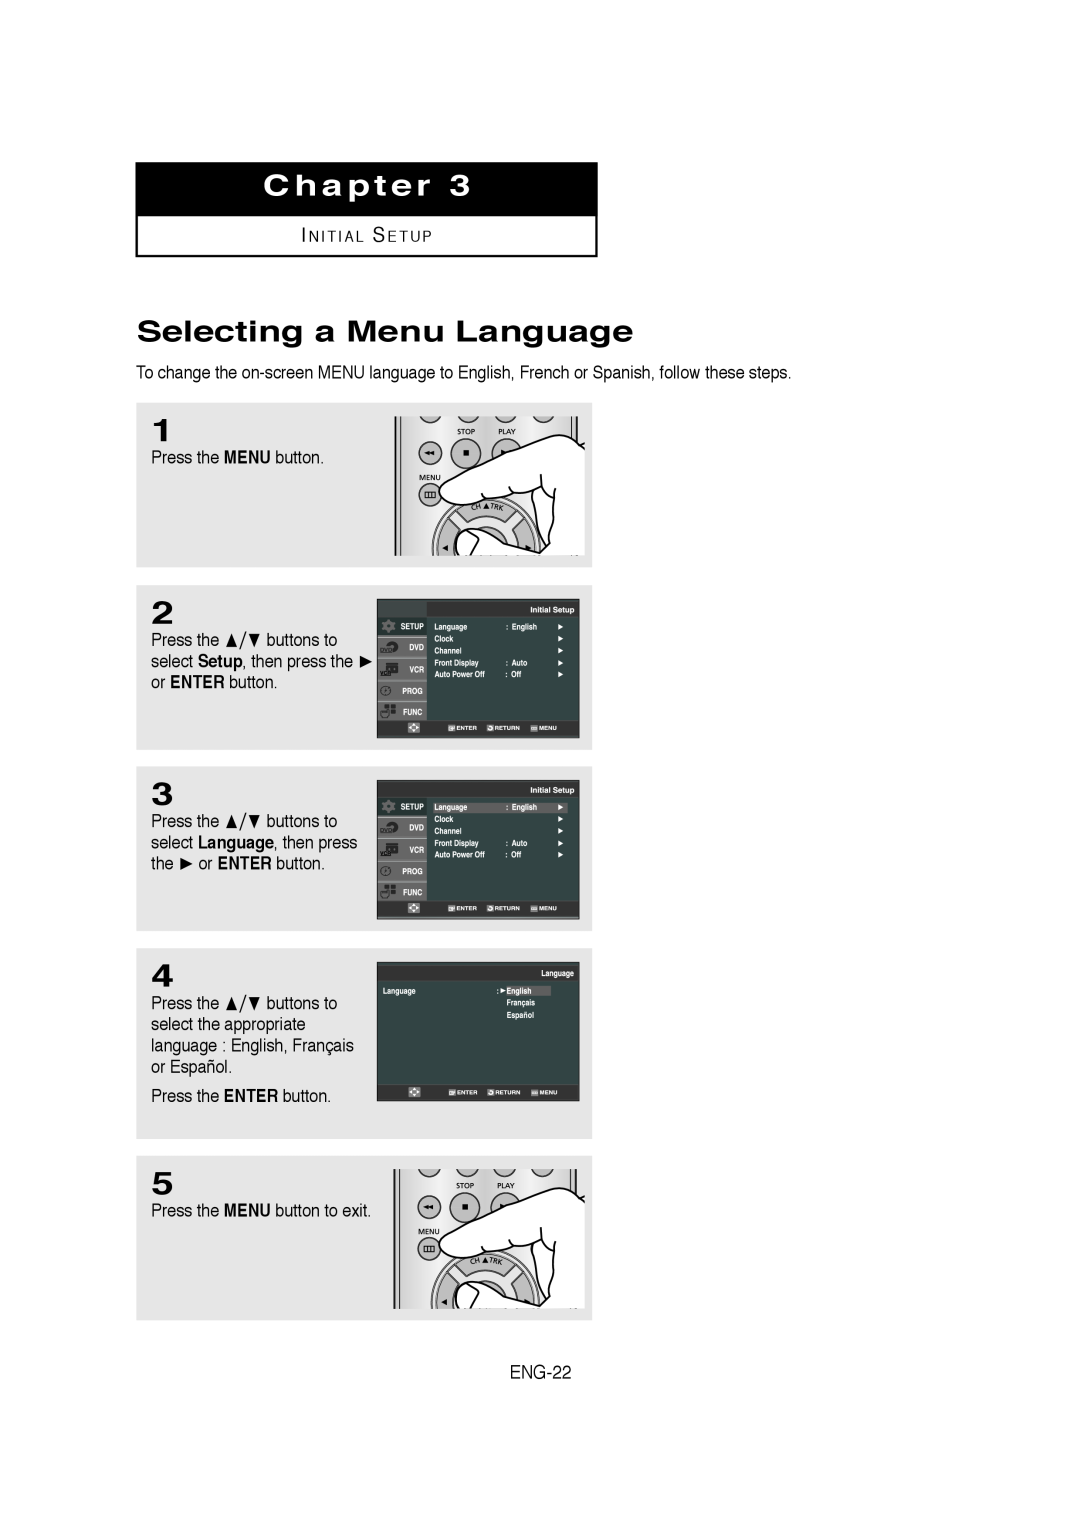 Samsung V6700-XAC, AK68-01304A, 20070205090323359 instruction manual Selecting a Menu Language, Chapter, ENG-22 